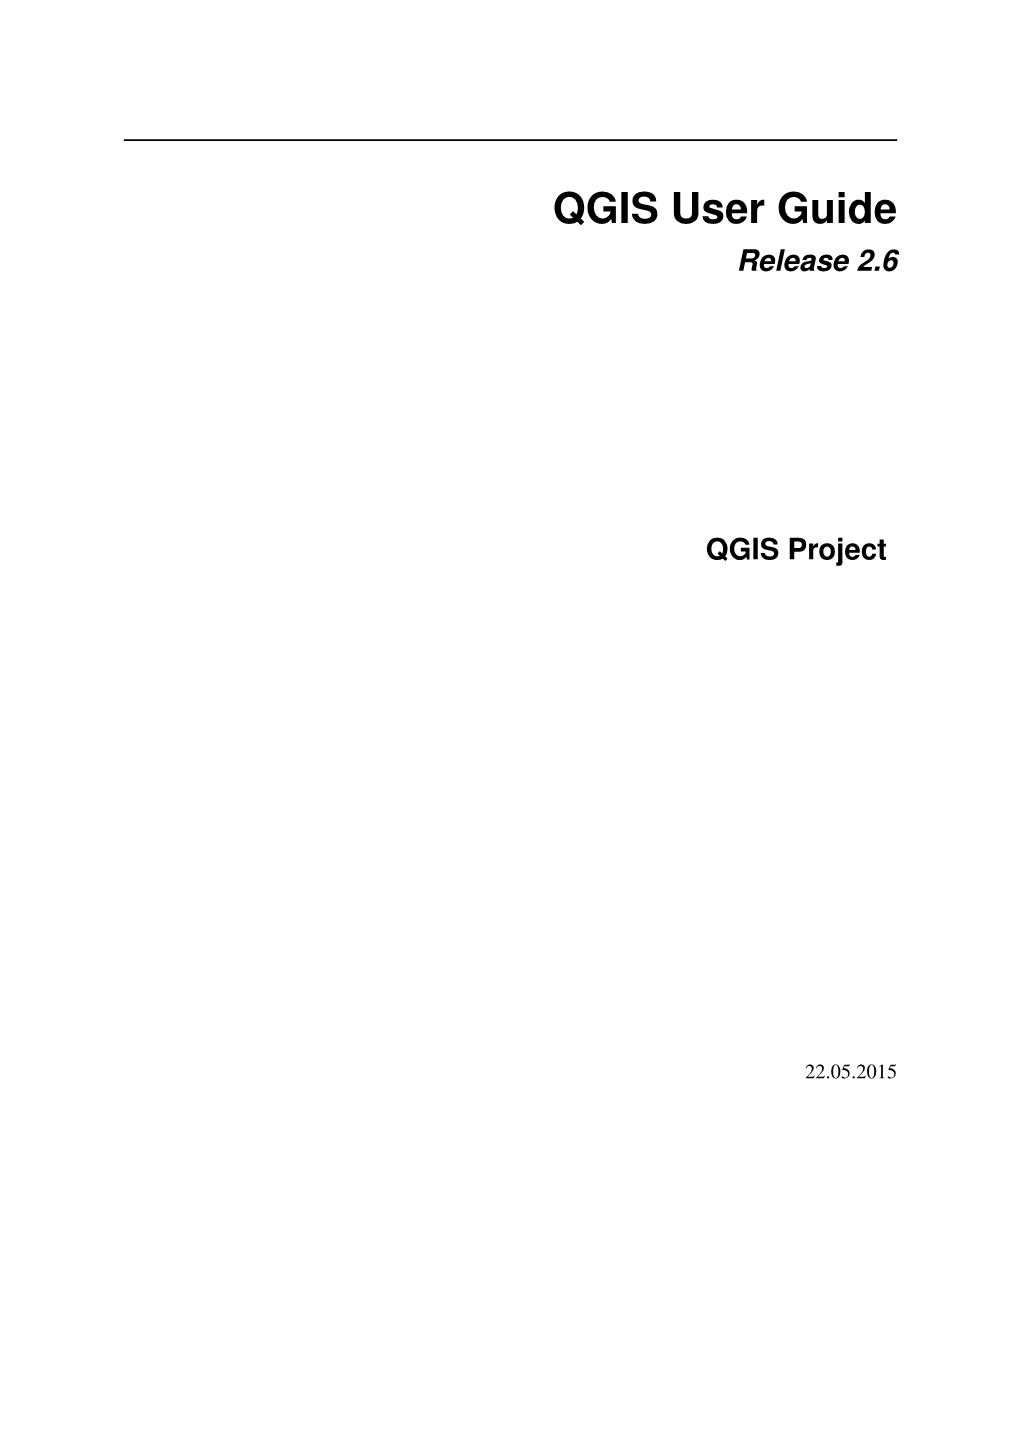 QGIS User Guide Release 2.6 QGIS Project